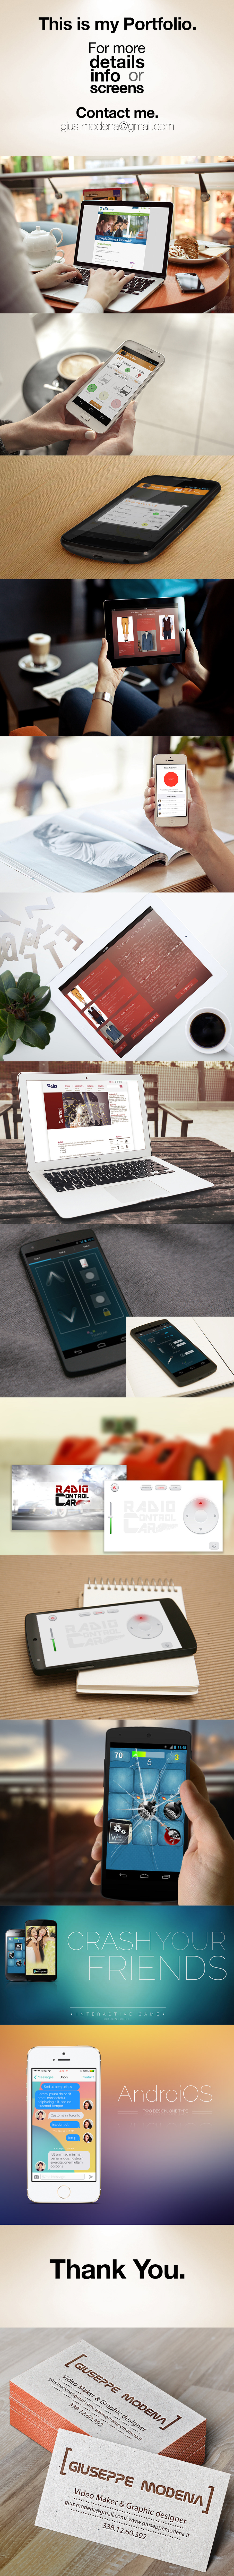 android ios iphone app mac ui design Web design video photo giuseppe modena www.giuseppemodena.it graphic